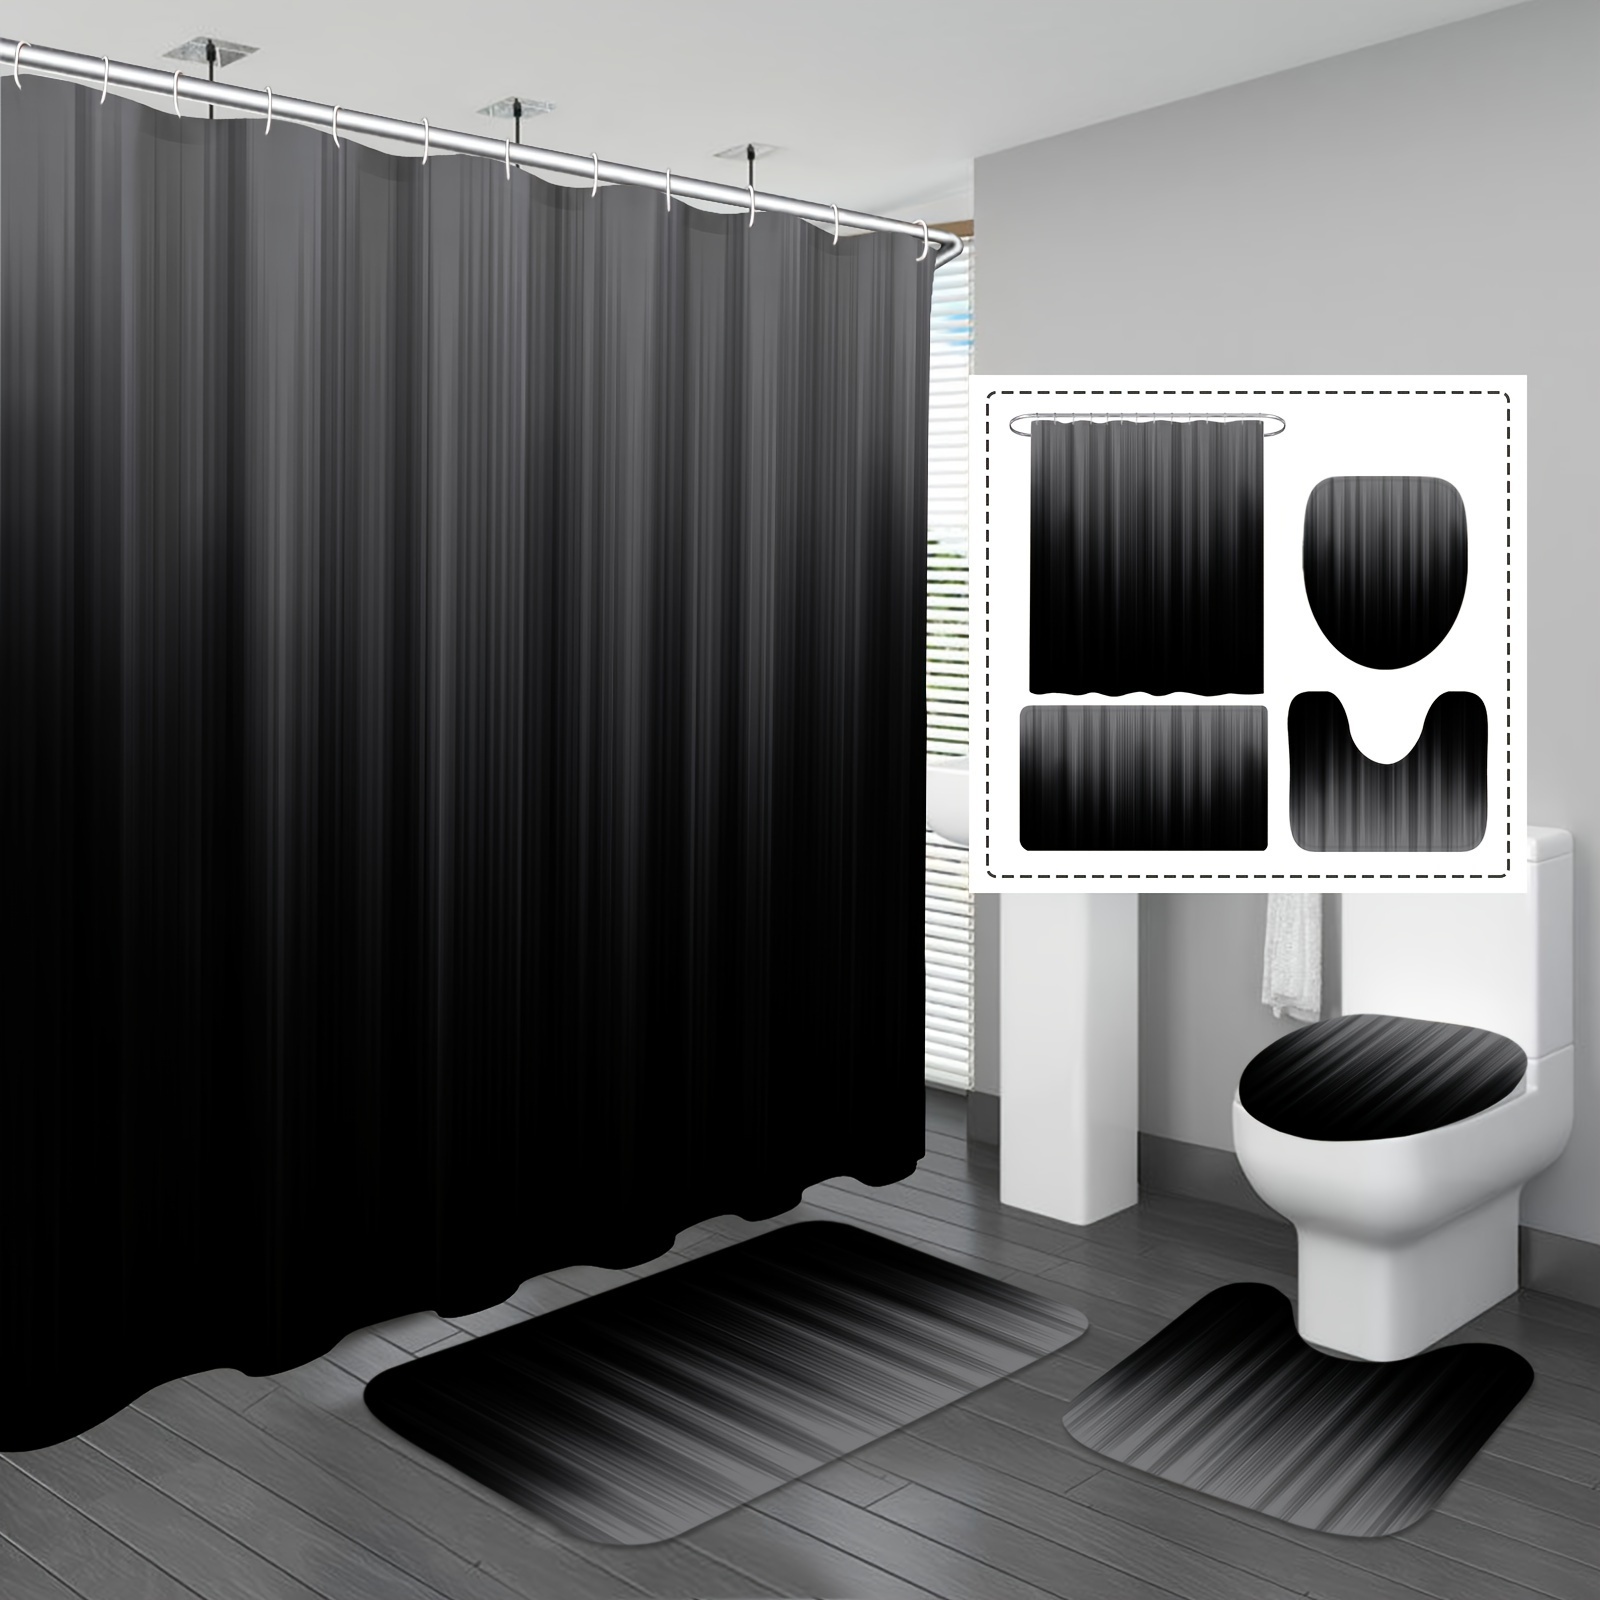 Cortina de ducha de poliéster resistente al moho Tela lavable negra Cortinas  de baño impermeables grandes